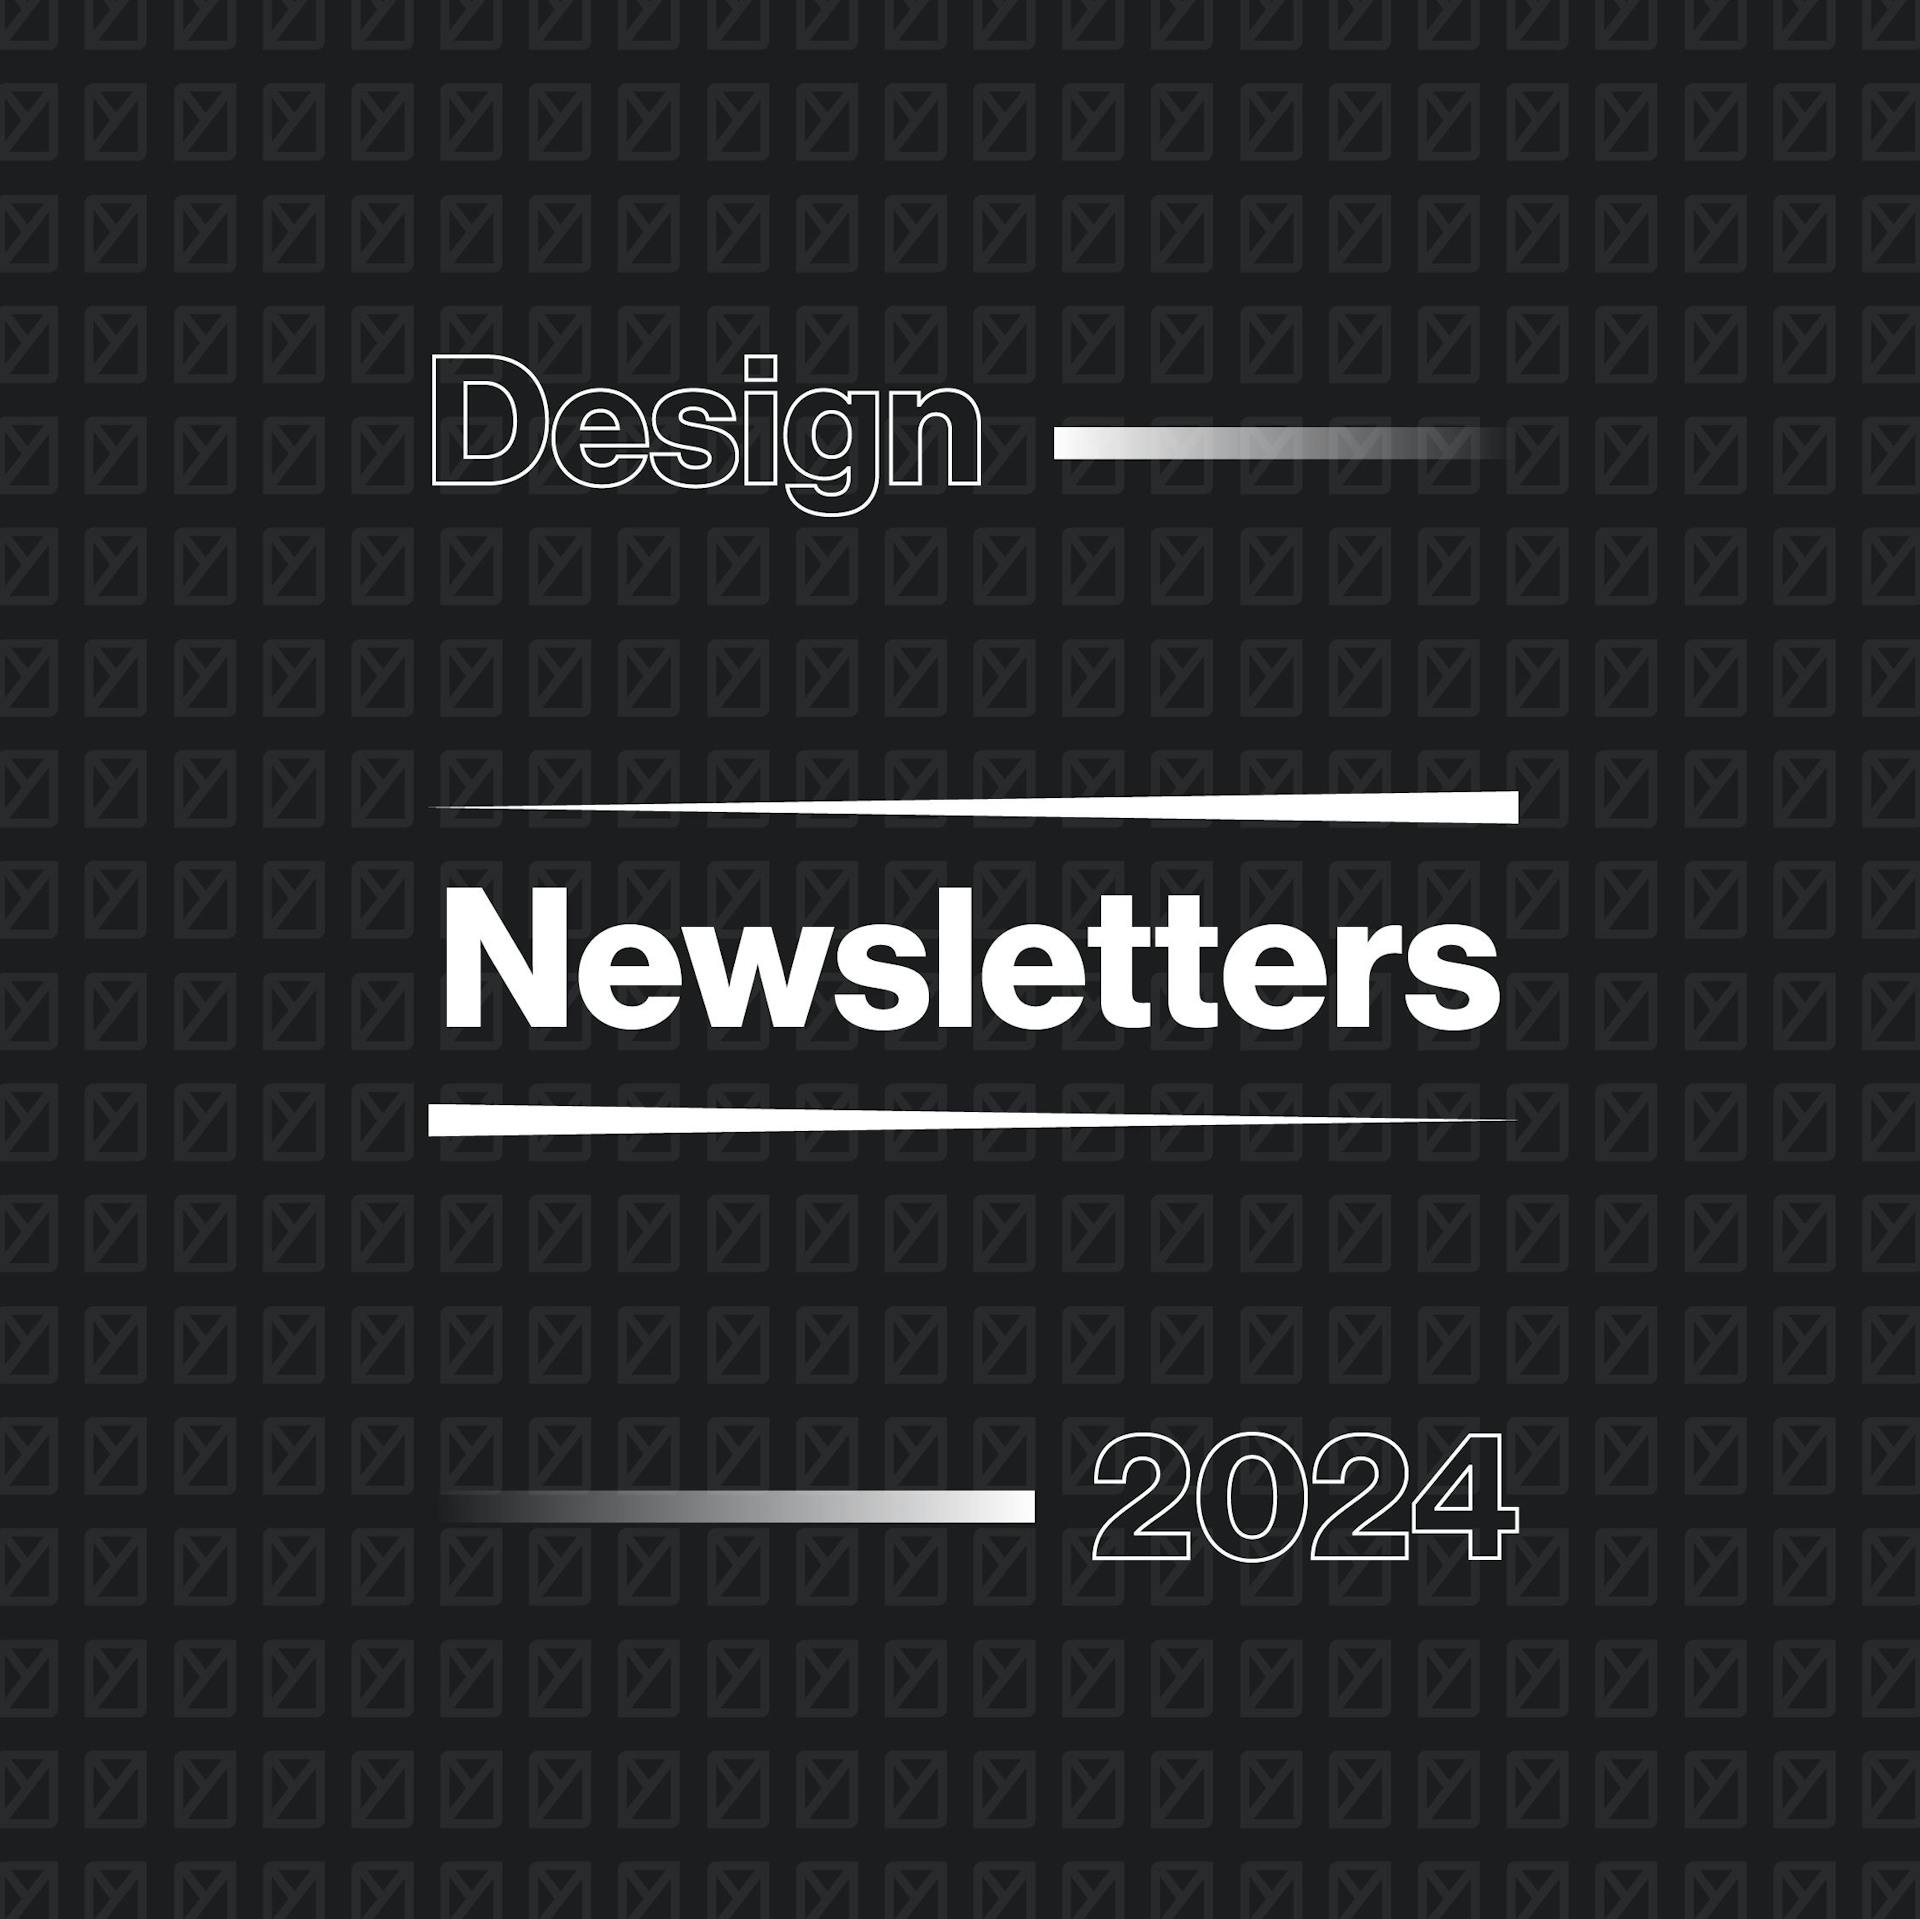 Newsletter Design - Email Direct Marketing in 2024